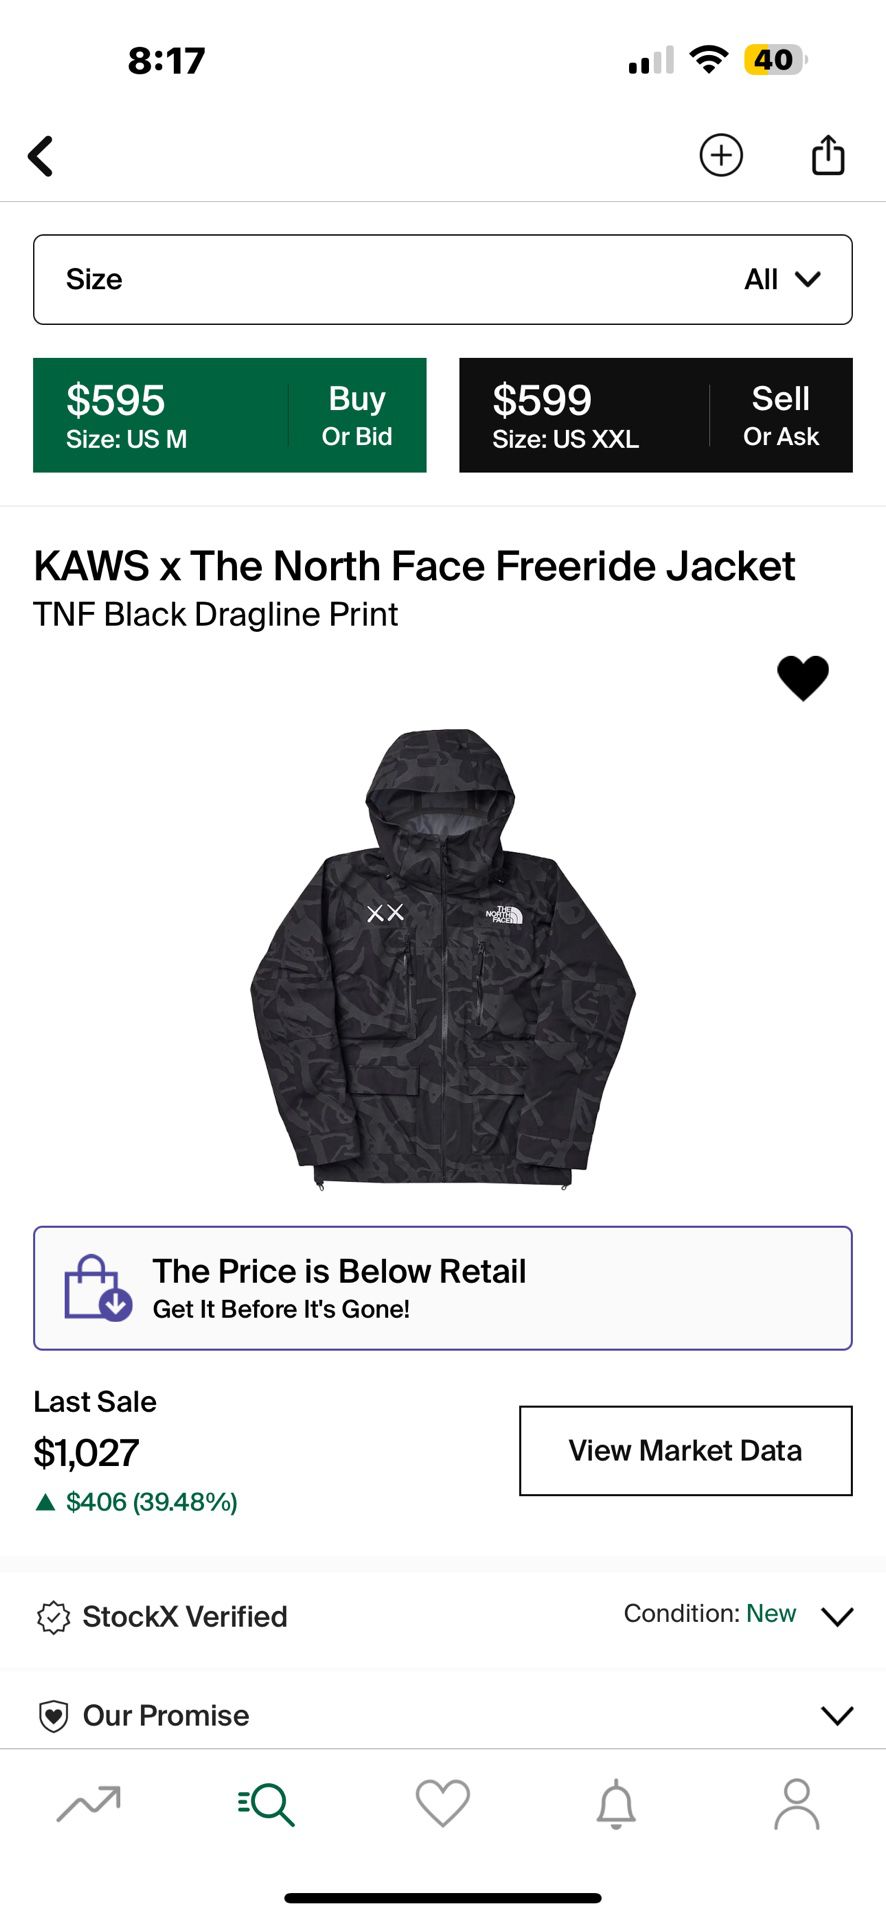 KAWS x The North Face Freeride Jacket